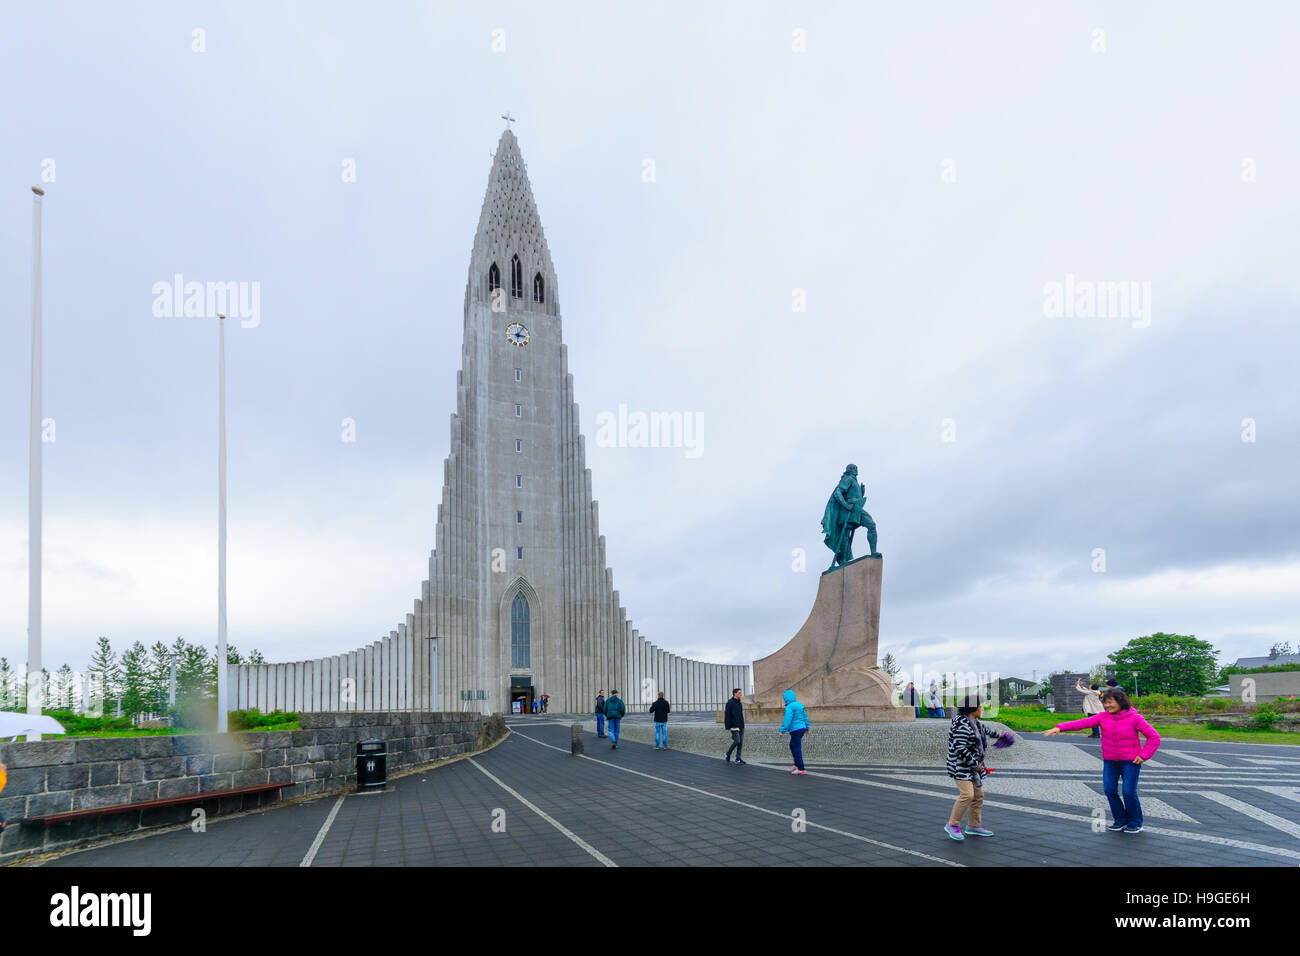 REYKJAVIK, ICELAND - JUNE 10, 2016: View of the Hallgrimskirkja church, with visitors, in Reykjavik, Iceland Stock Photo